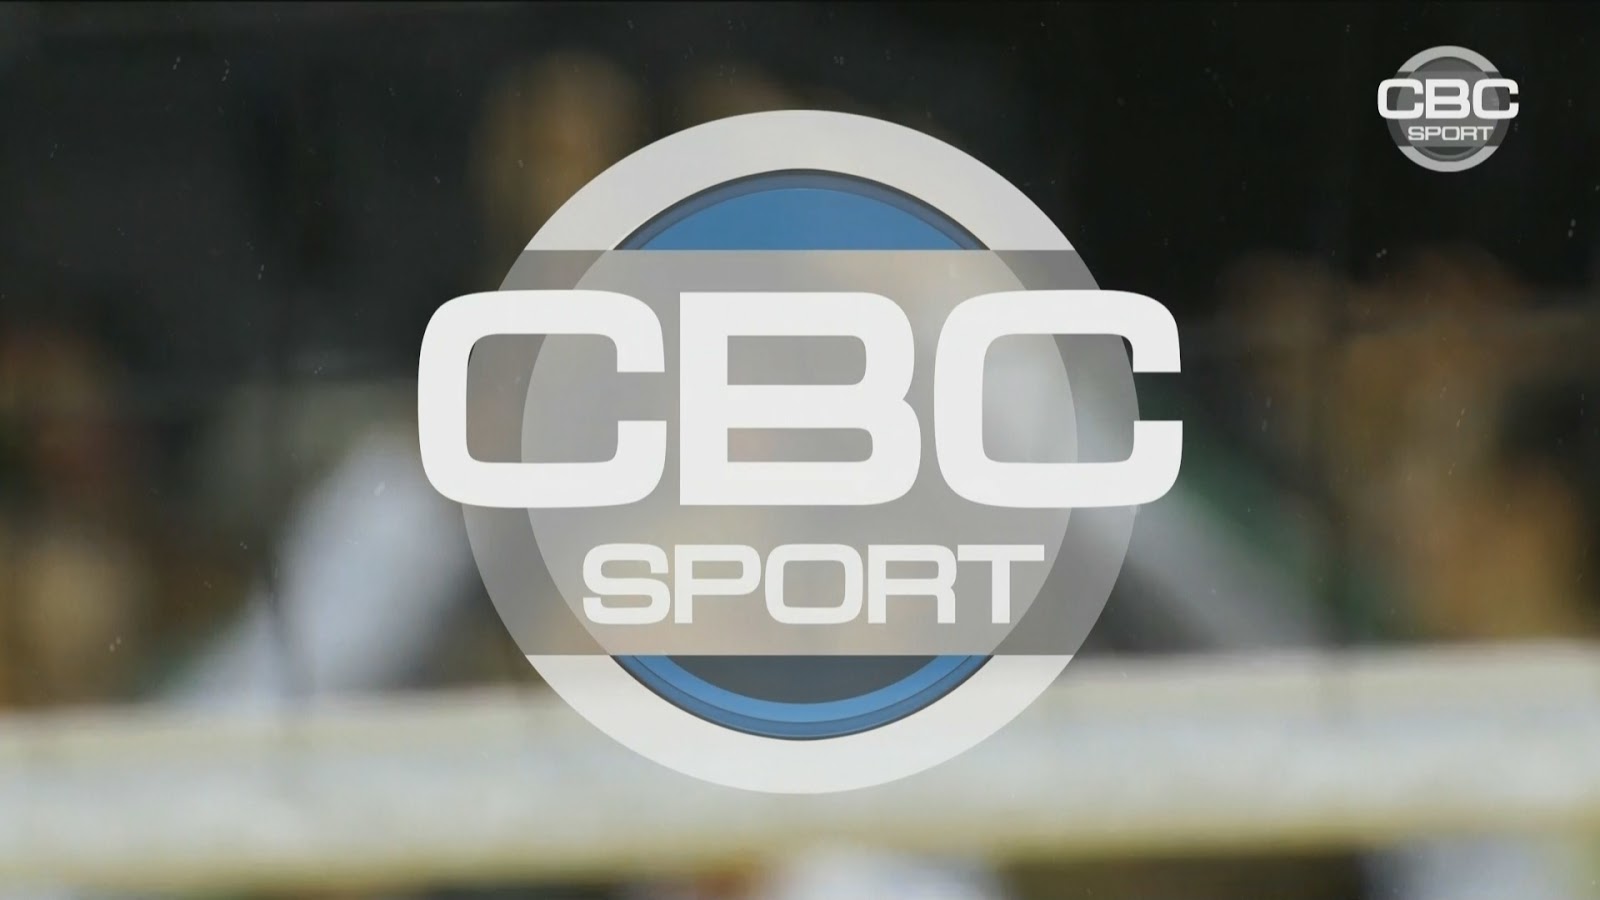 Канал CBC Sport. СВС Sport Canli. CBC Sport Canli. CBC Sport одежда. Cbs sport izle